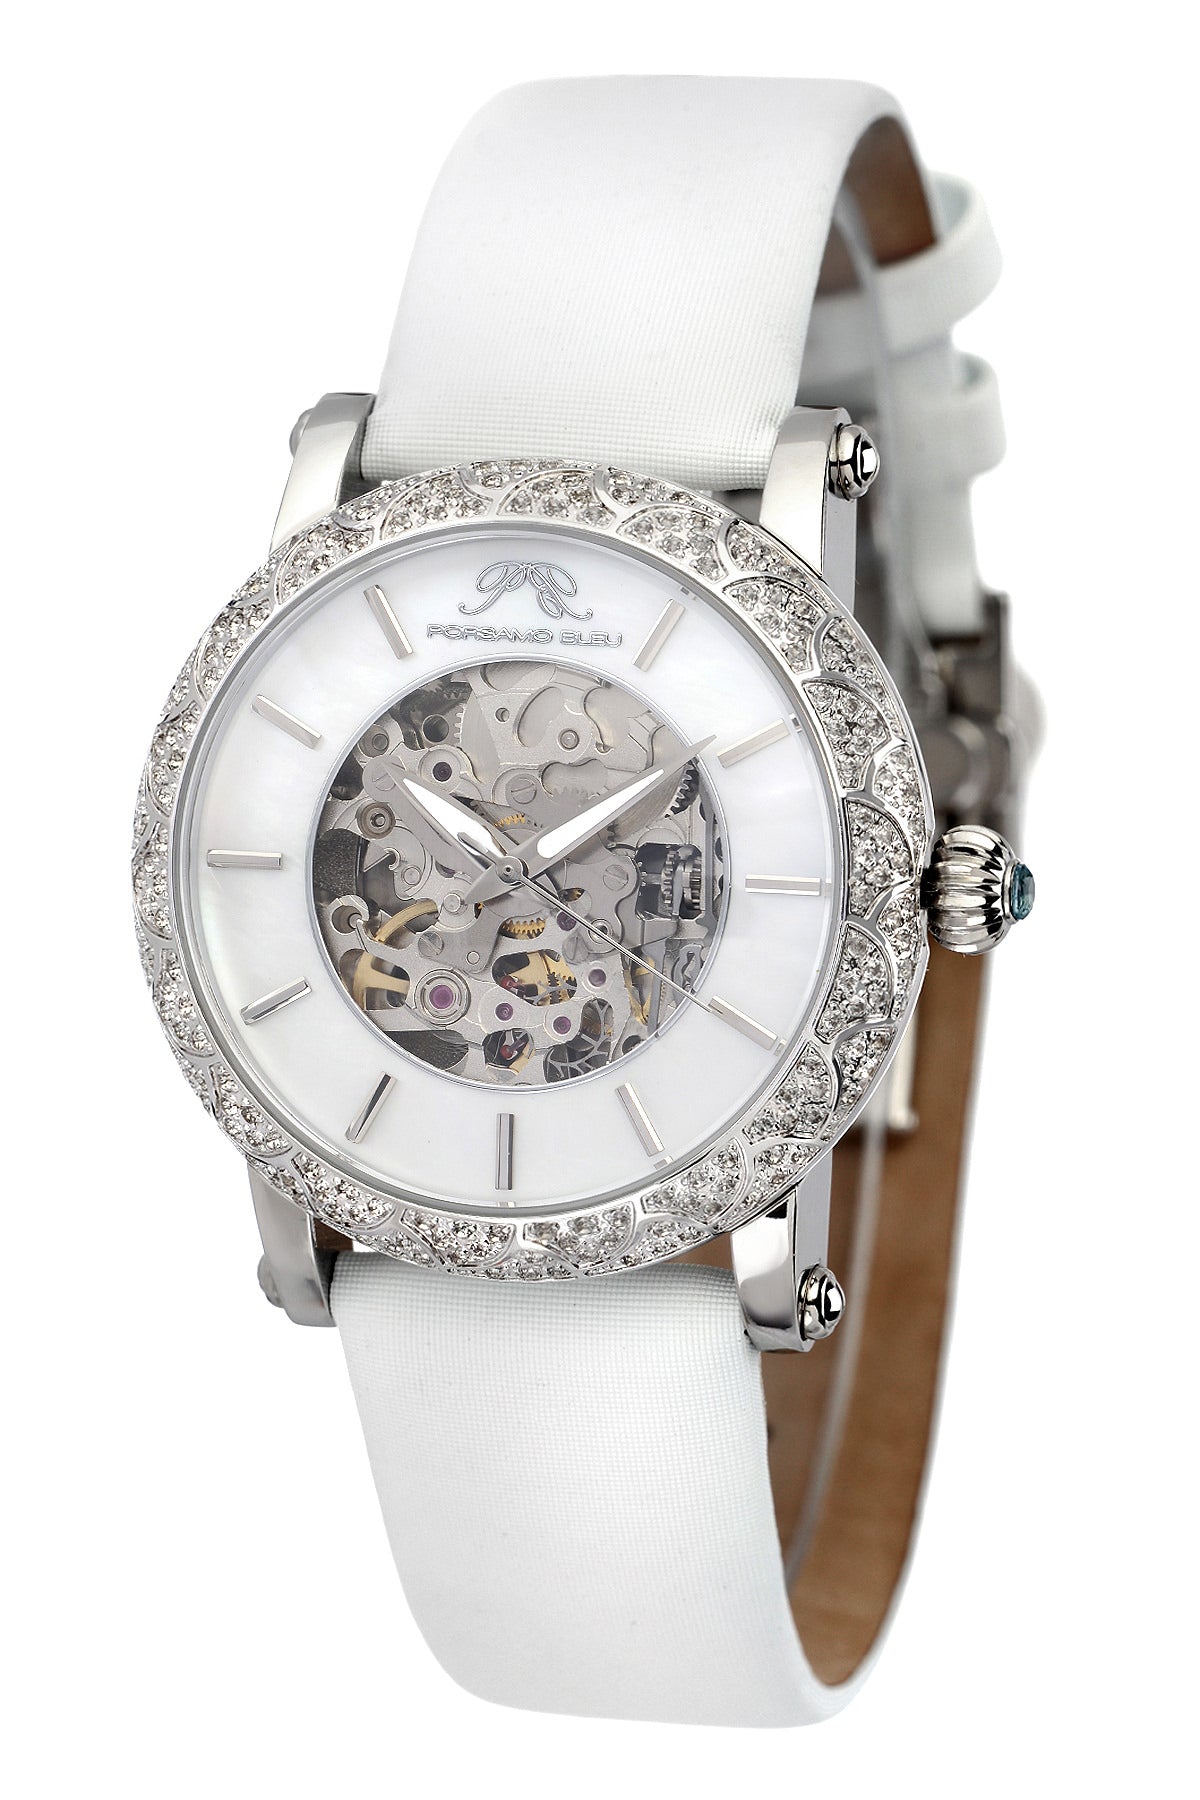 Porsamo Bleu Liza Luxury Automatic Topaz Women's Watch, Satin Leather Watch, Silver, White 691ALIL